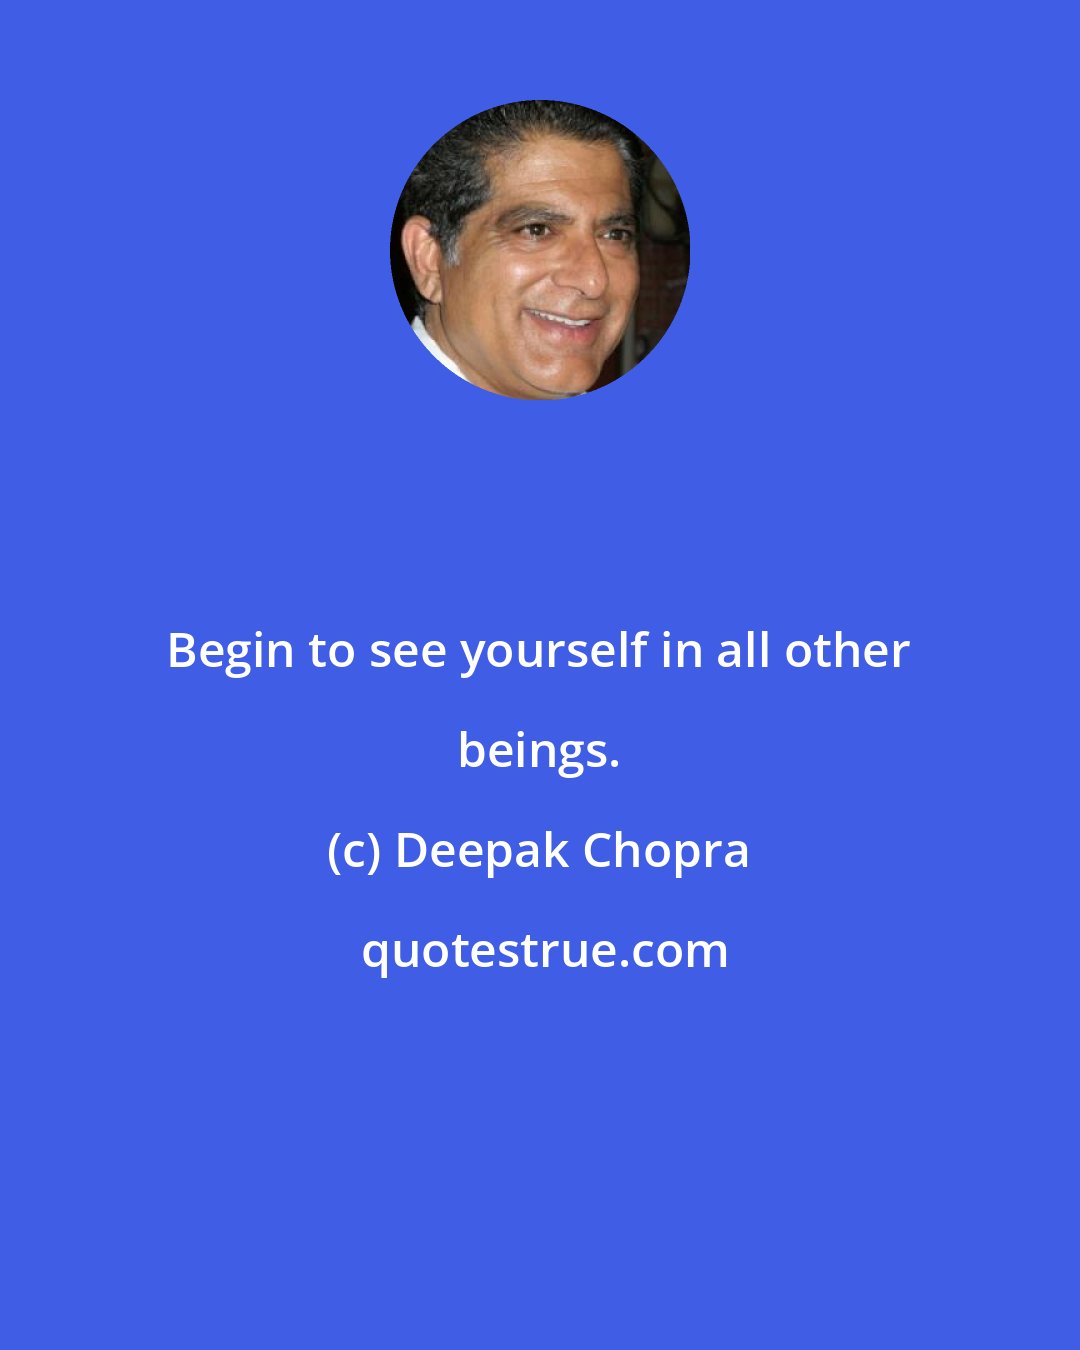 Deepak Chopra: Begin to see yourself in all other beings.